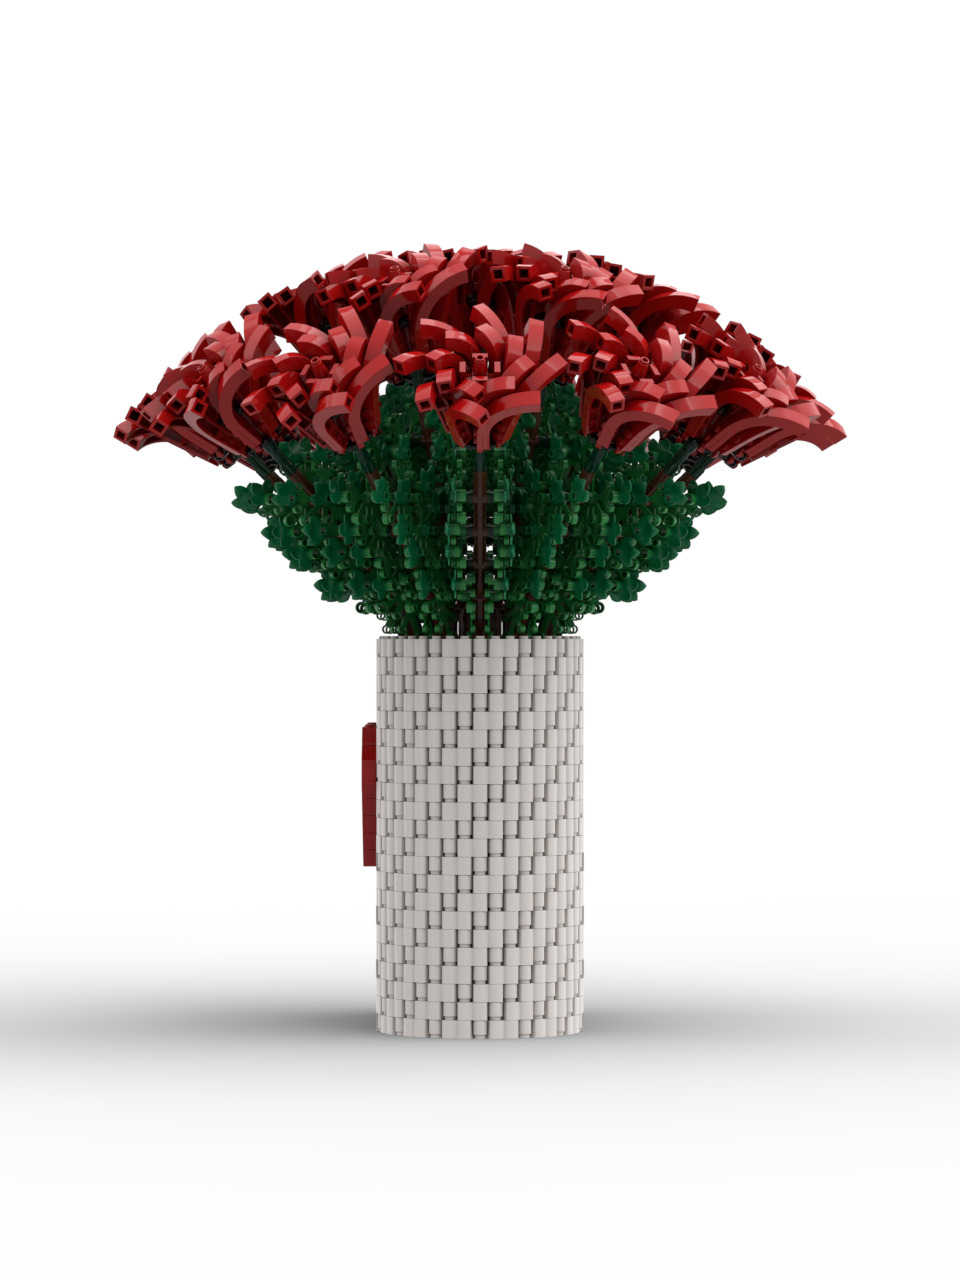 LEGO MOC Red & White Roses (BT007) by DoctorOctoroc